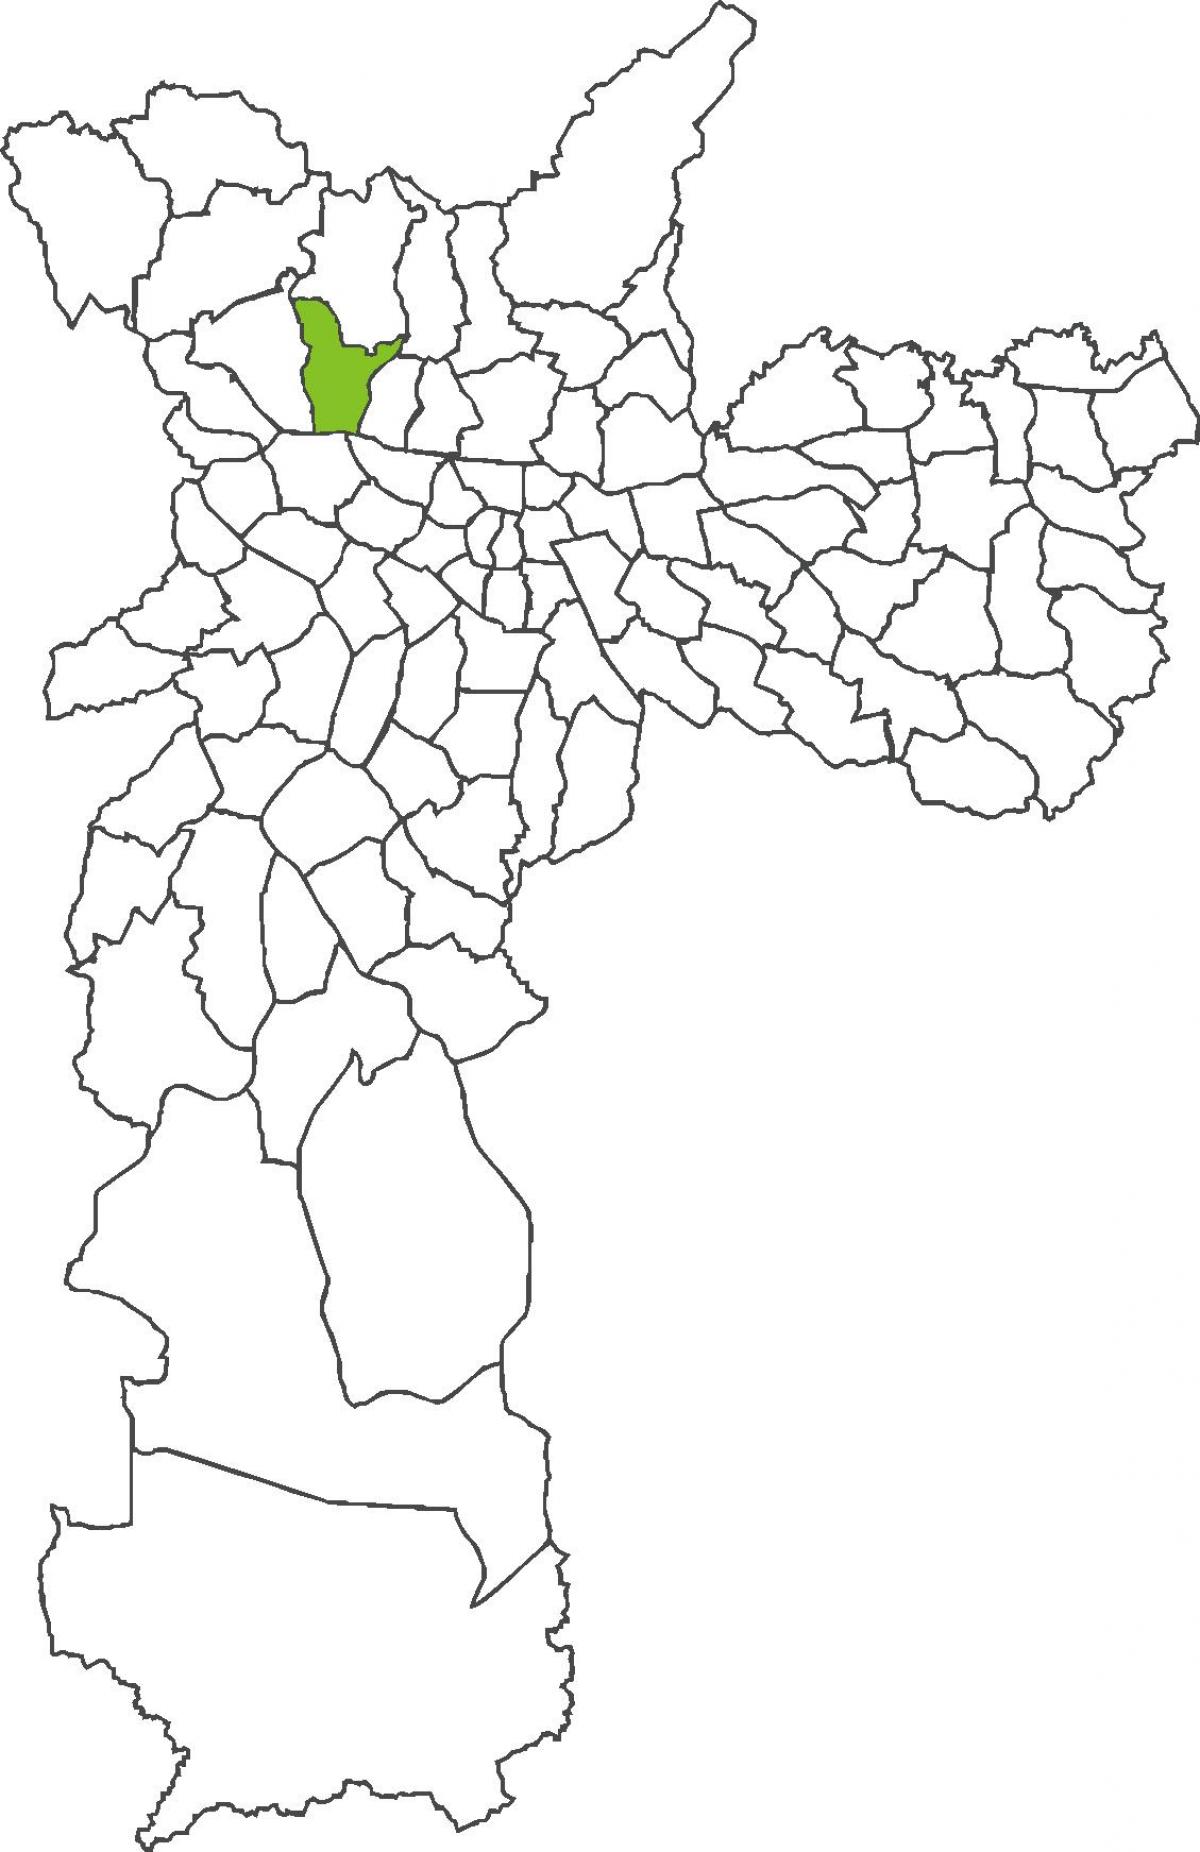 Peta dari Freguesia do Ó kabupaten